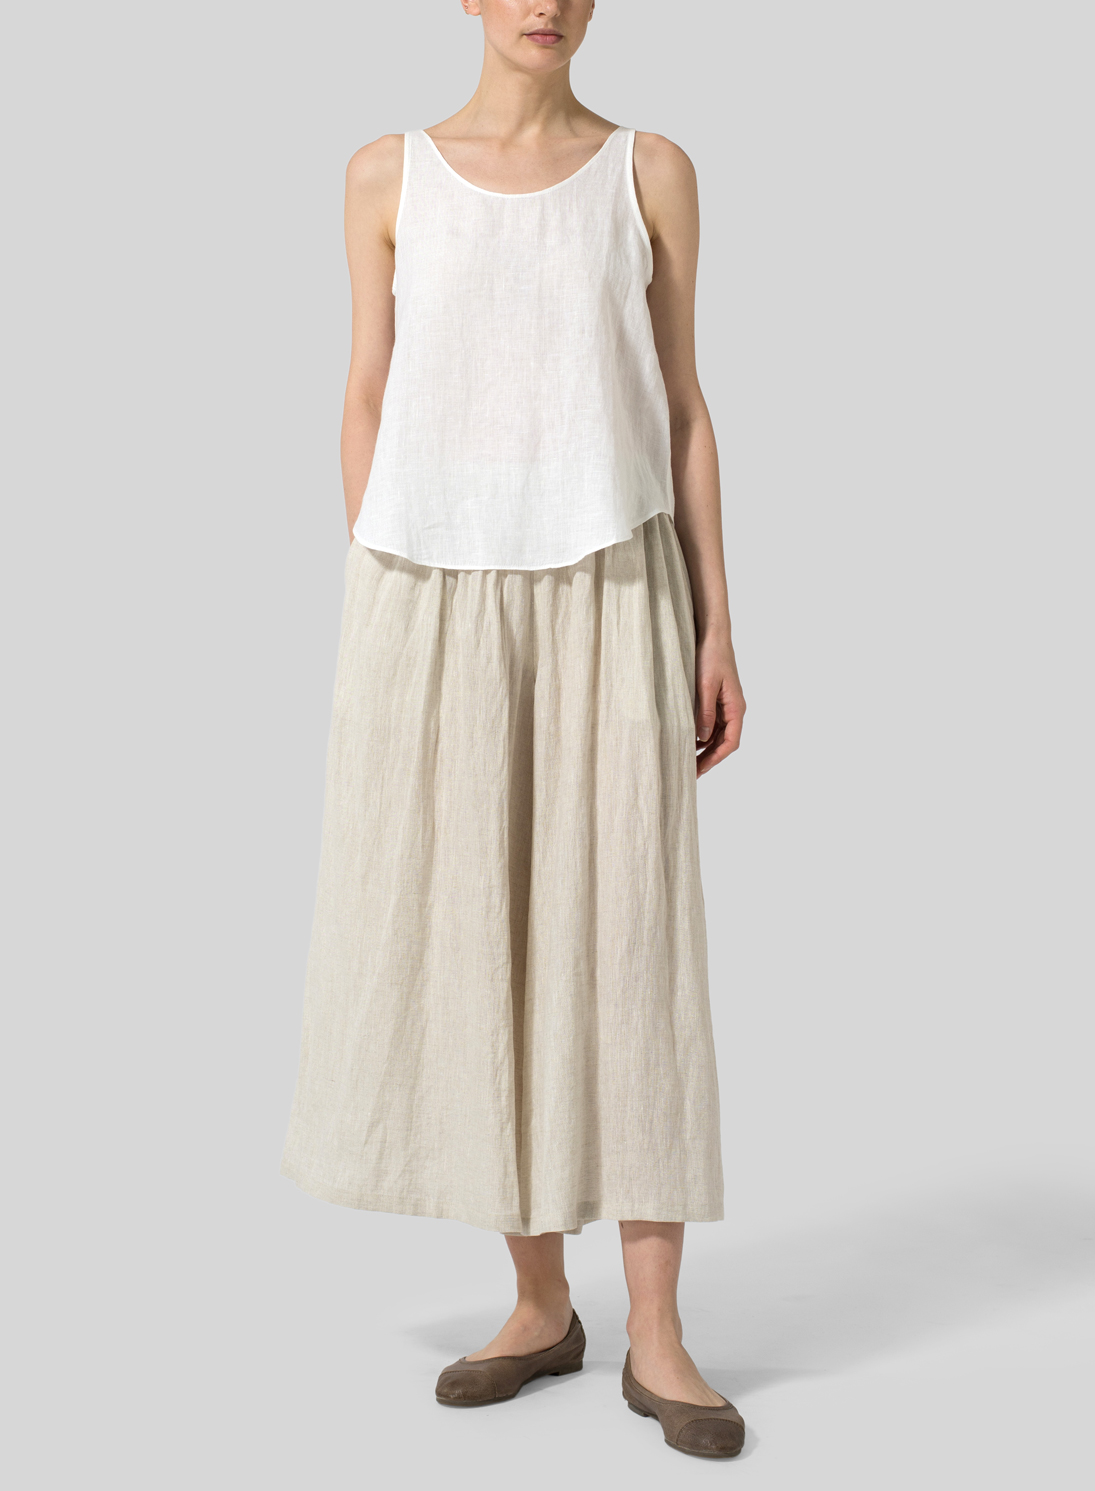 Linen Thin Strap Cami - Plus Size